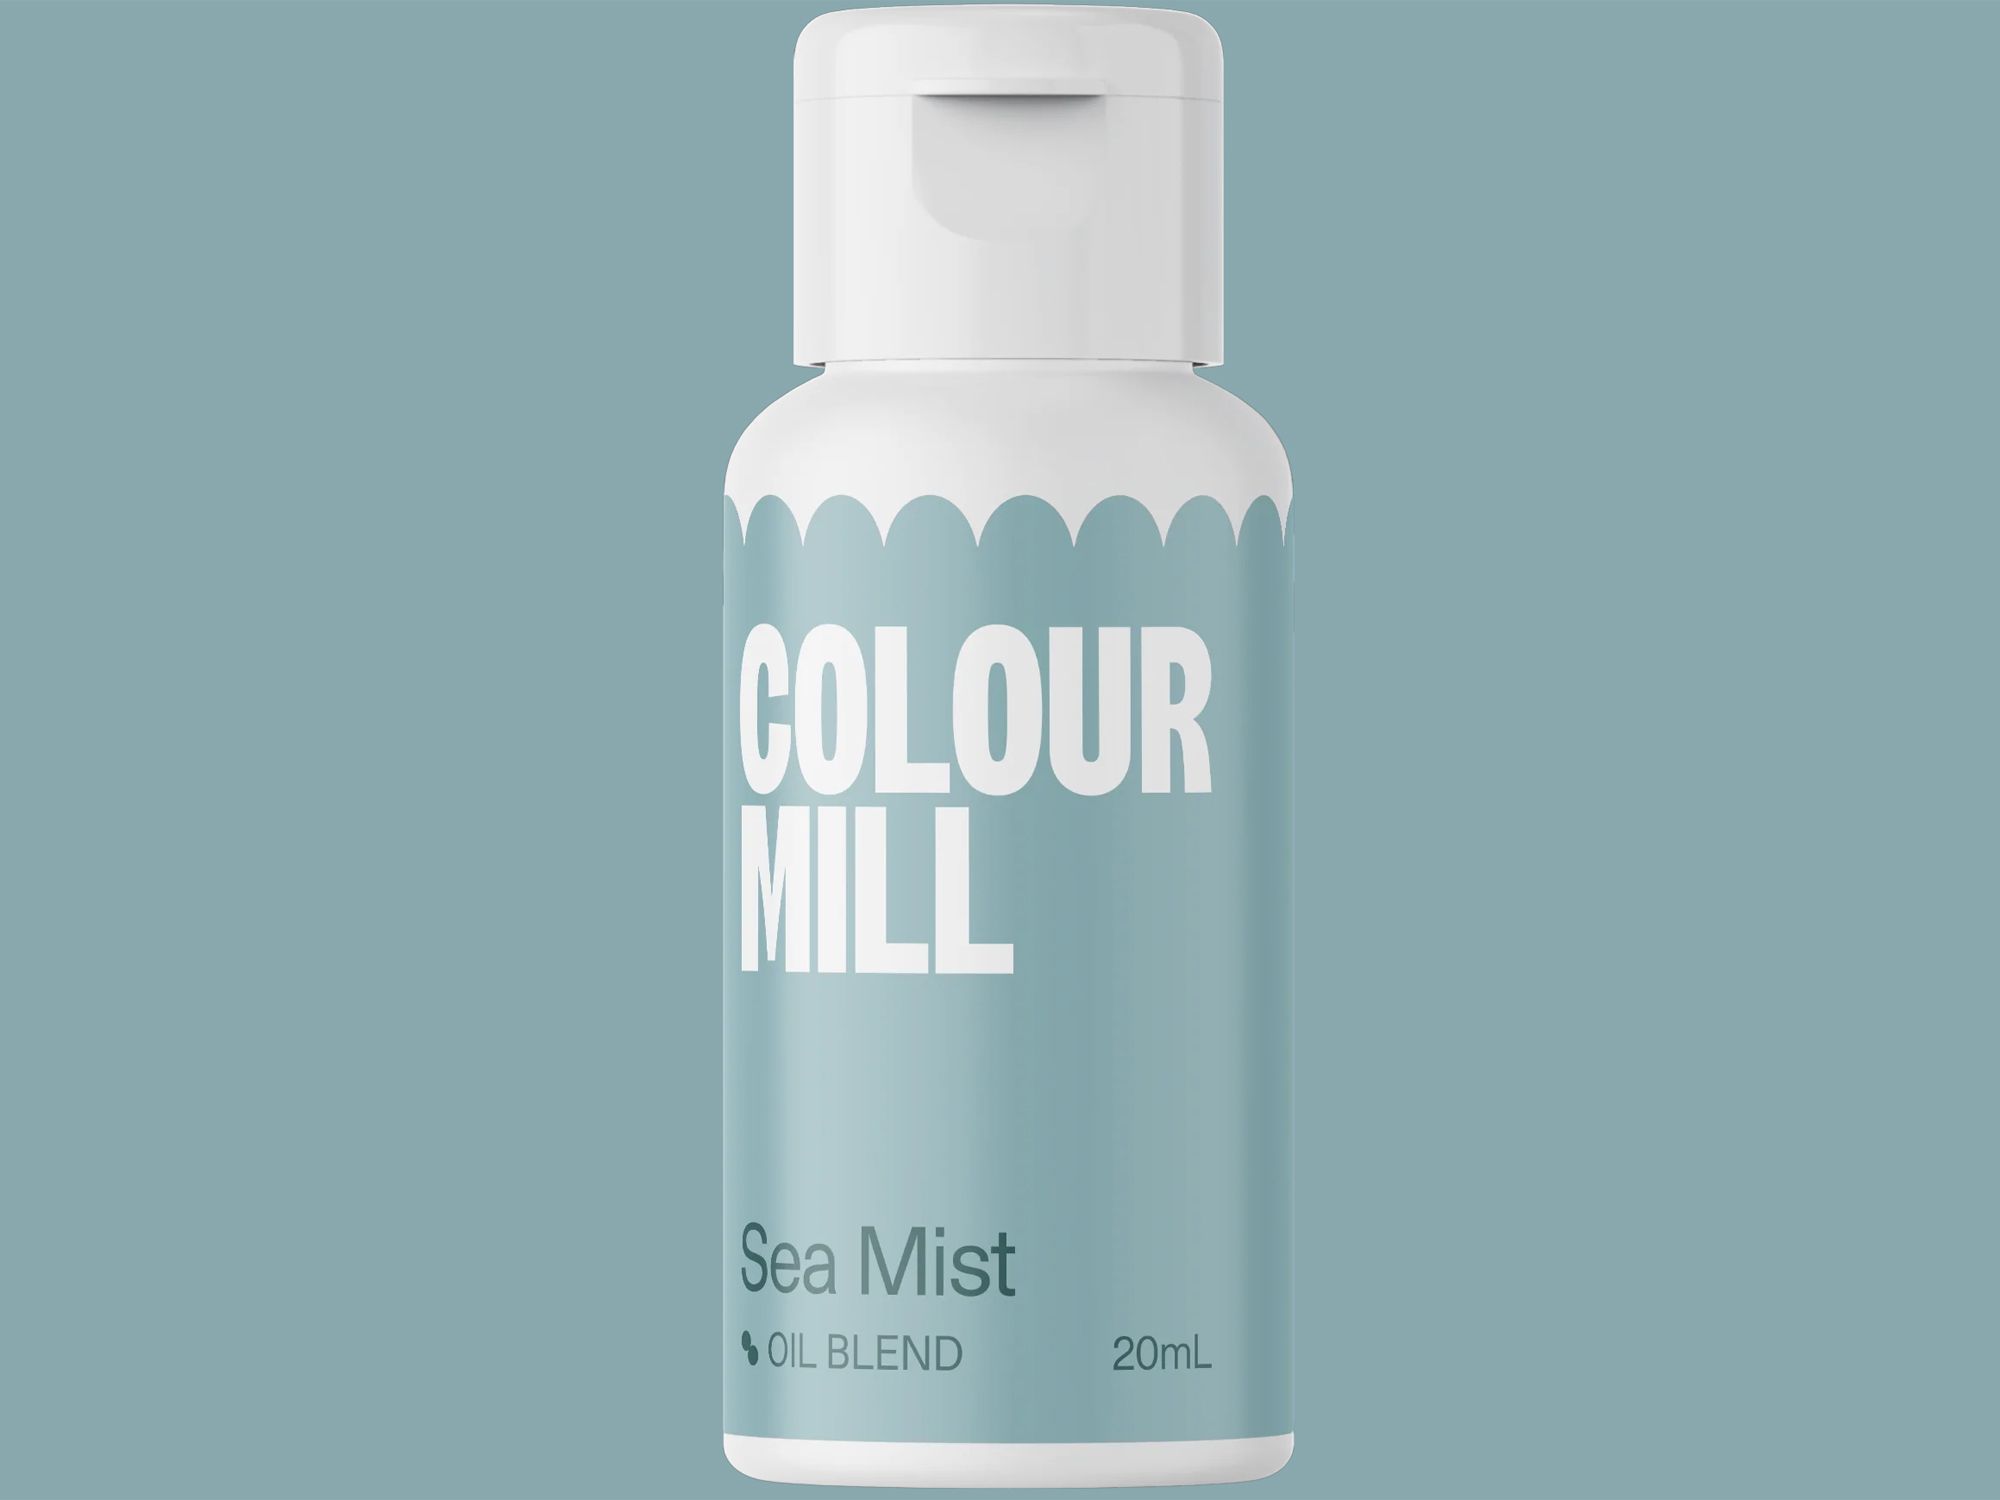 Colour Mill Sea Mist (Oil Blend) 20ml